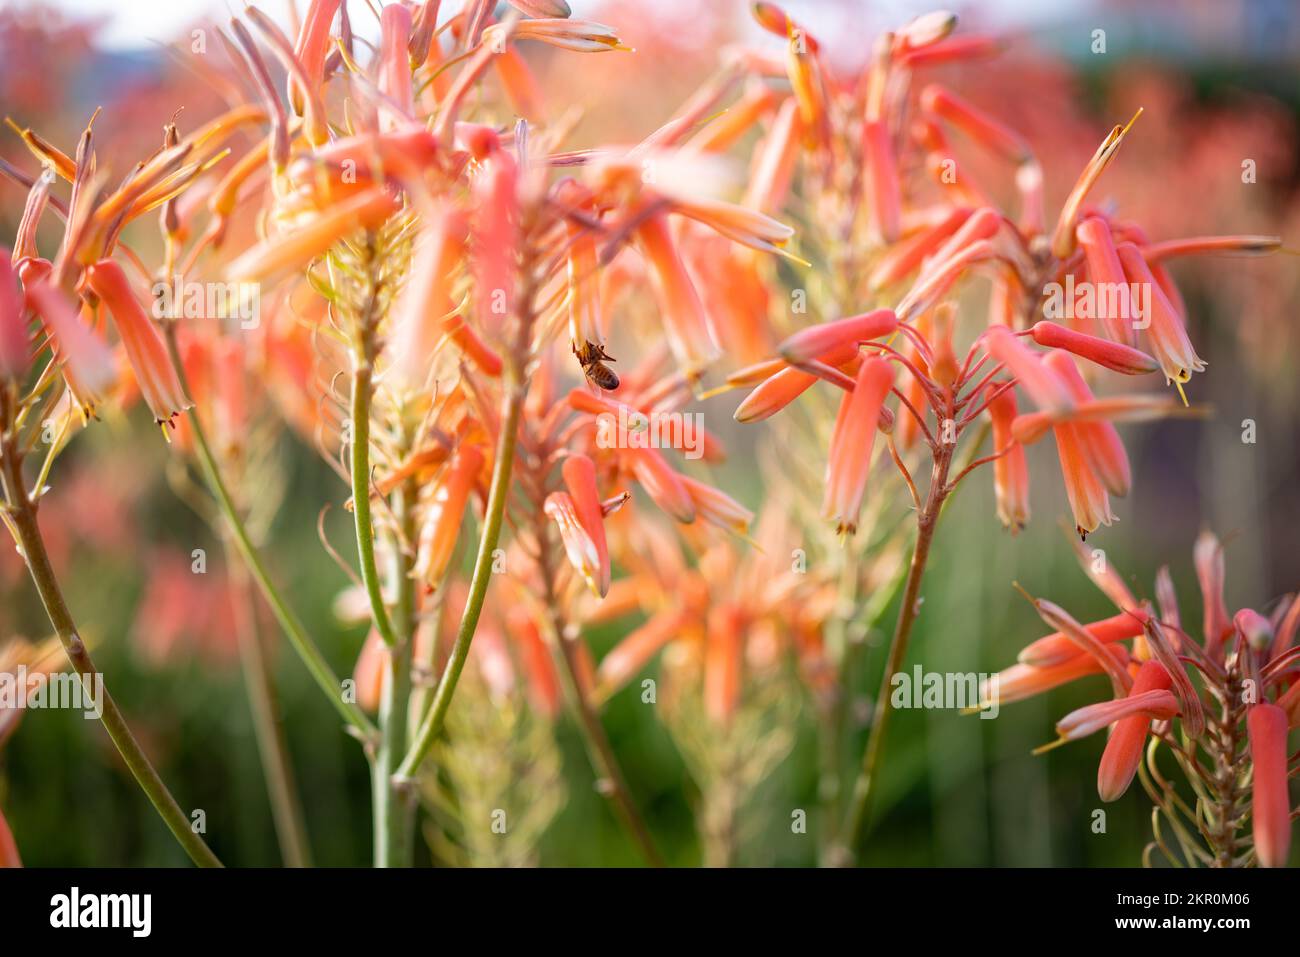 Aloe vera pink-orange flowers pollinated by a bee - closeup Stock Photo